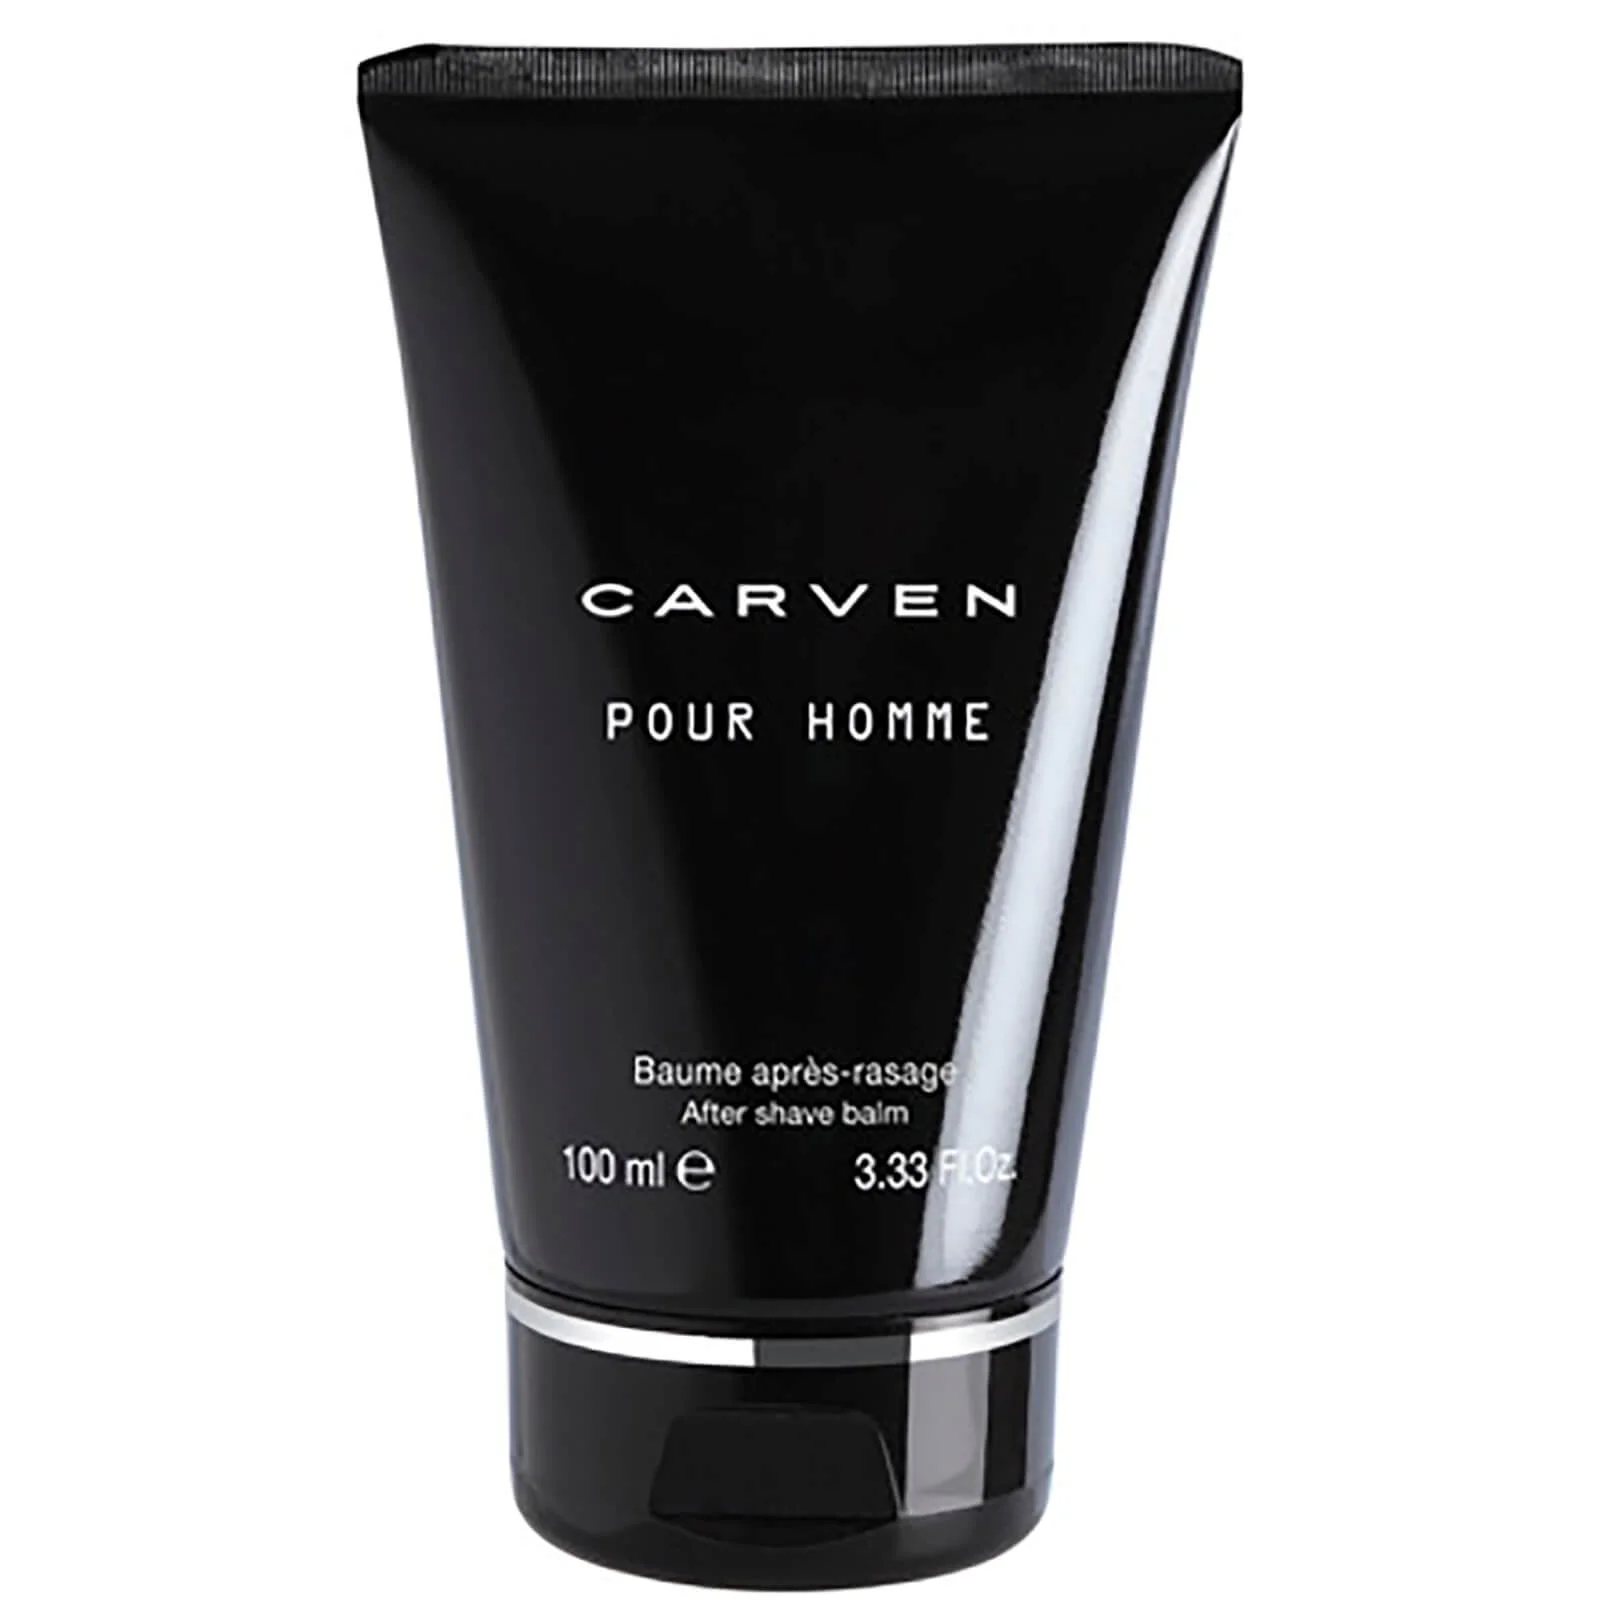 Carven Pour Homme After Shave Balm (100ml) Image 1